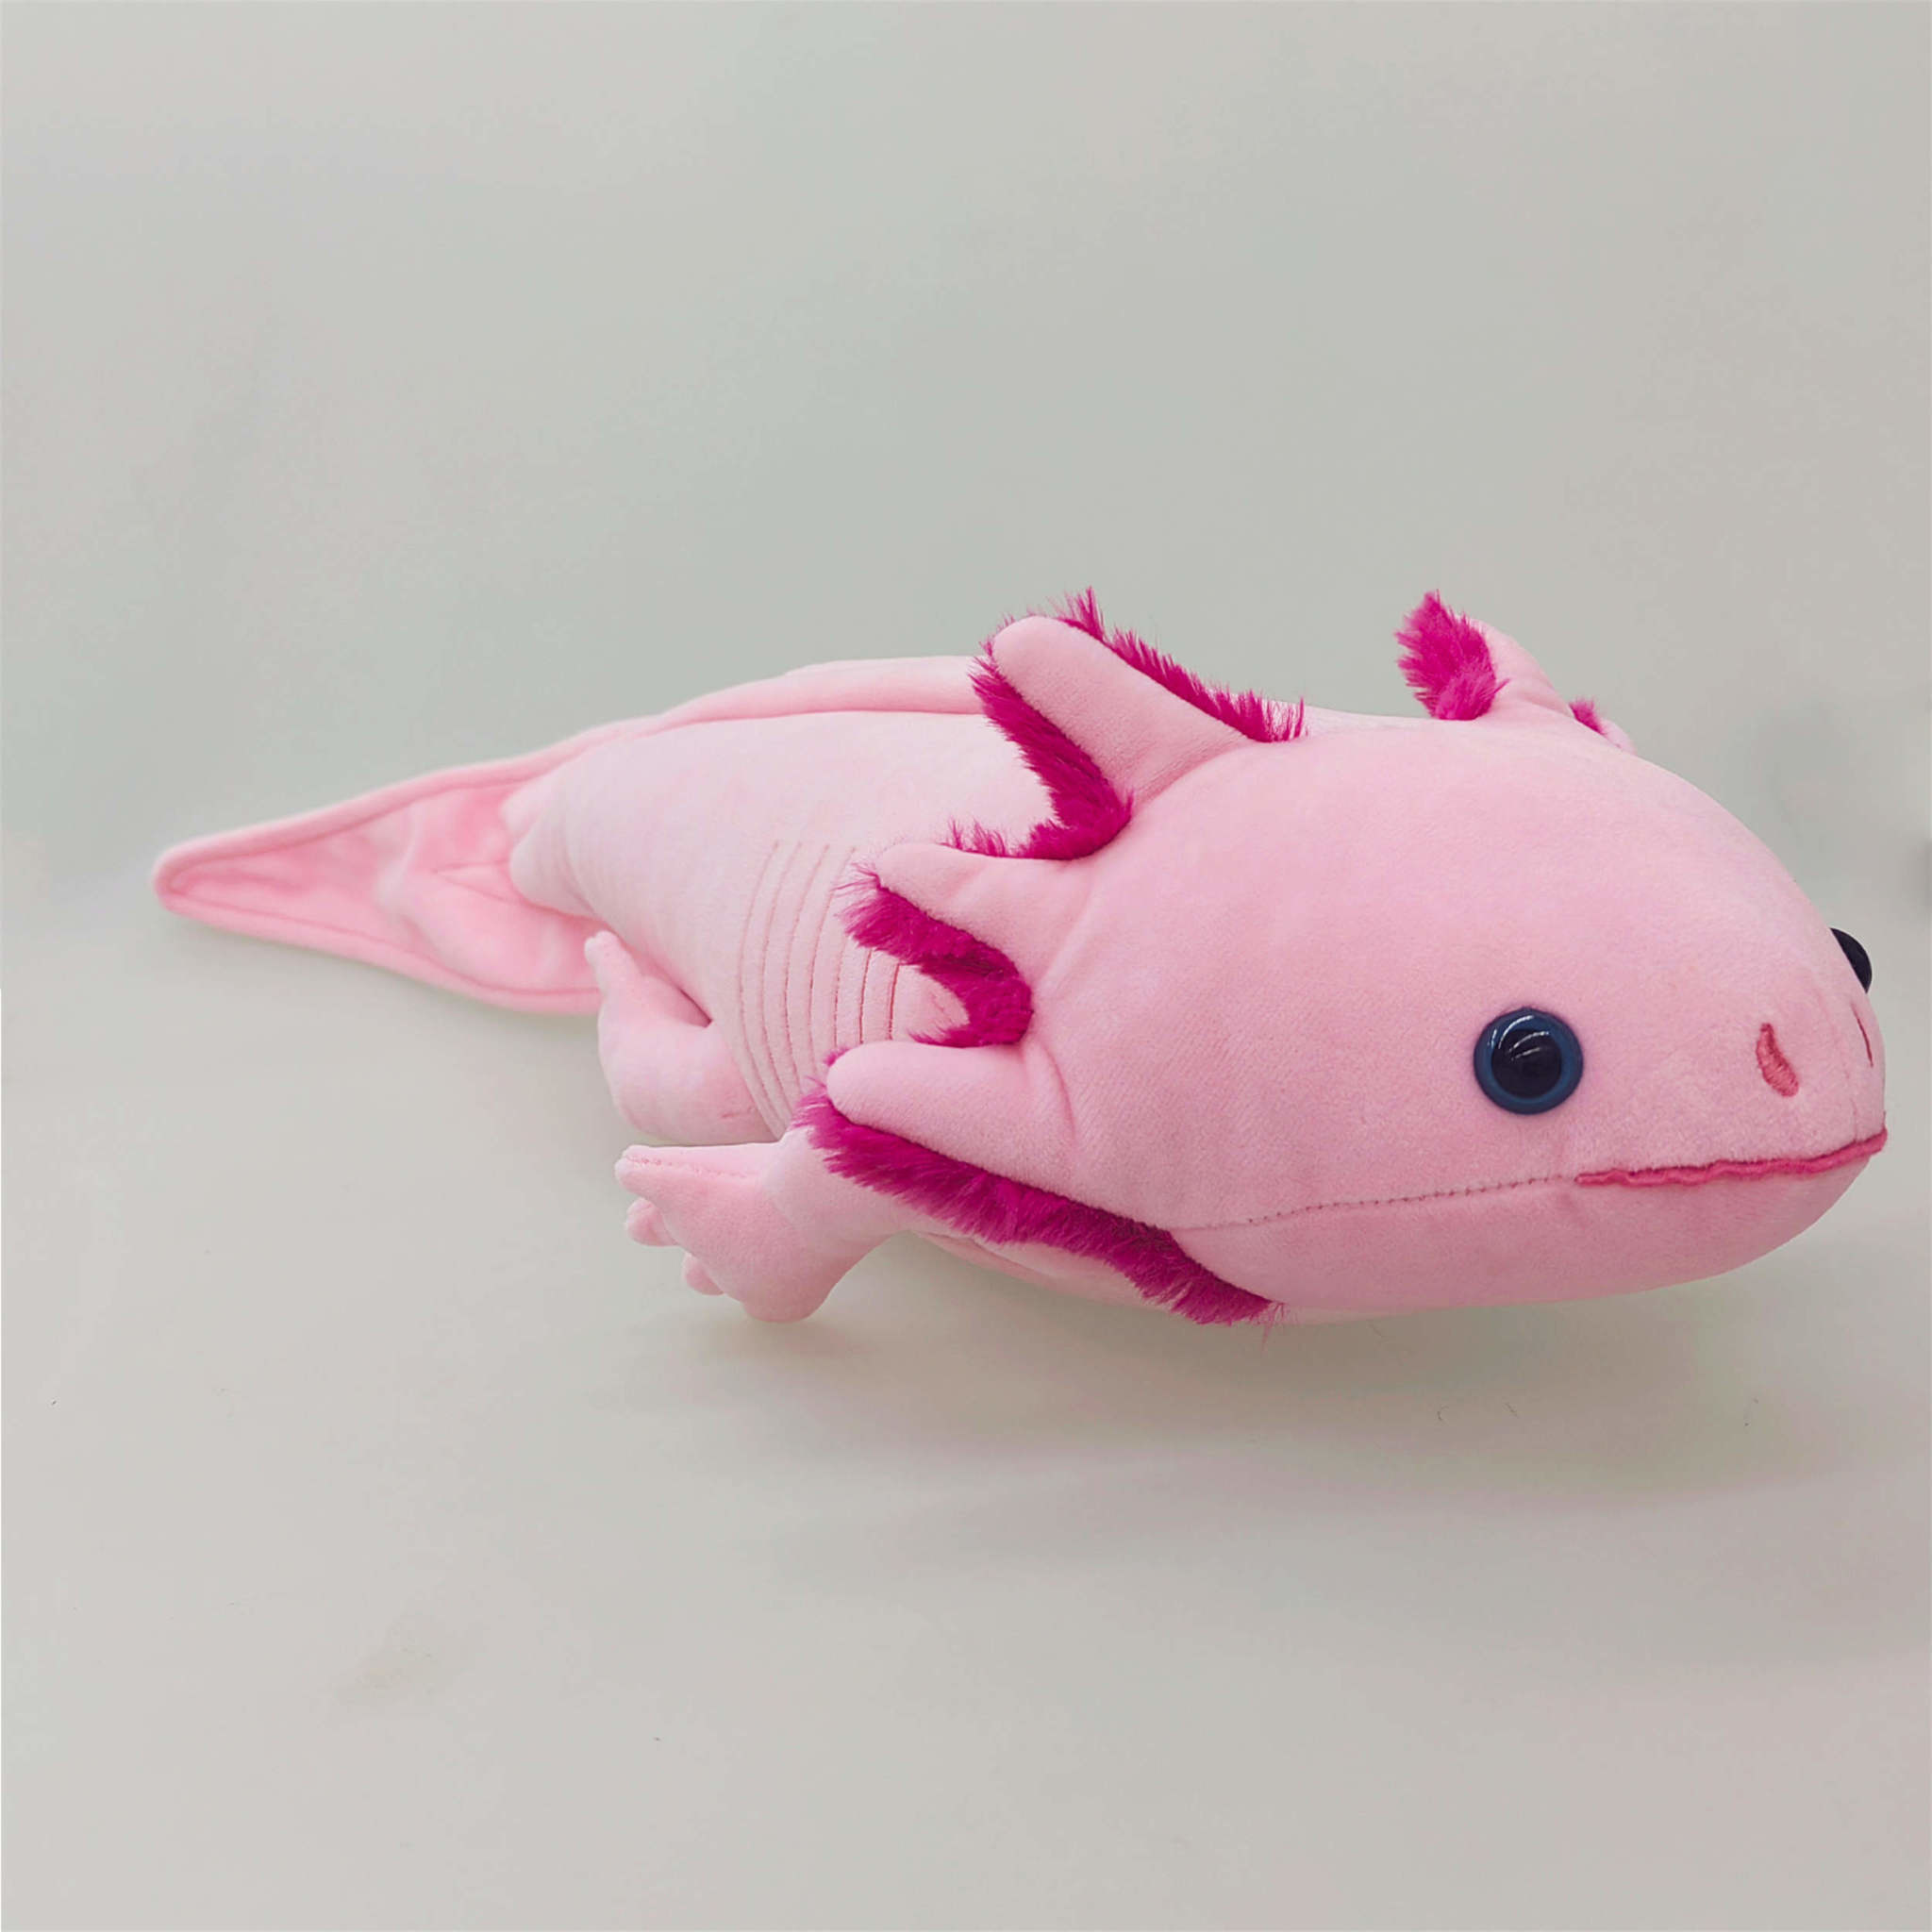 pink axolotl